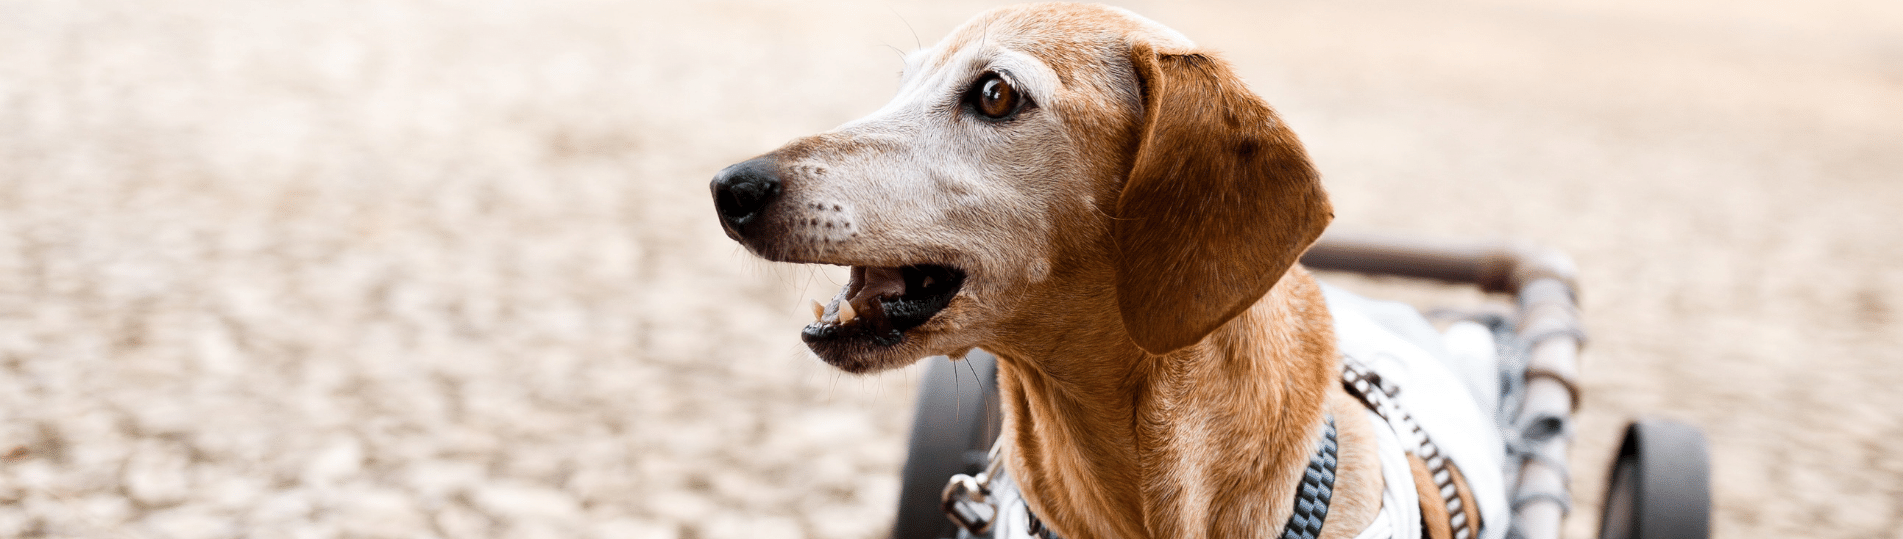 dachshund in a wheel cart